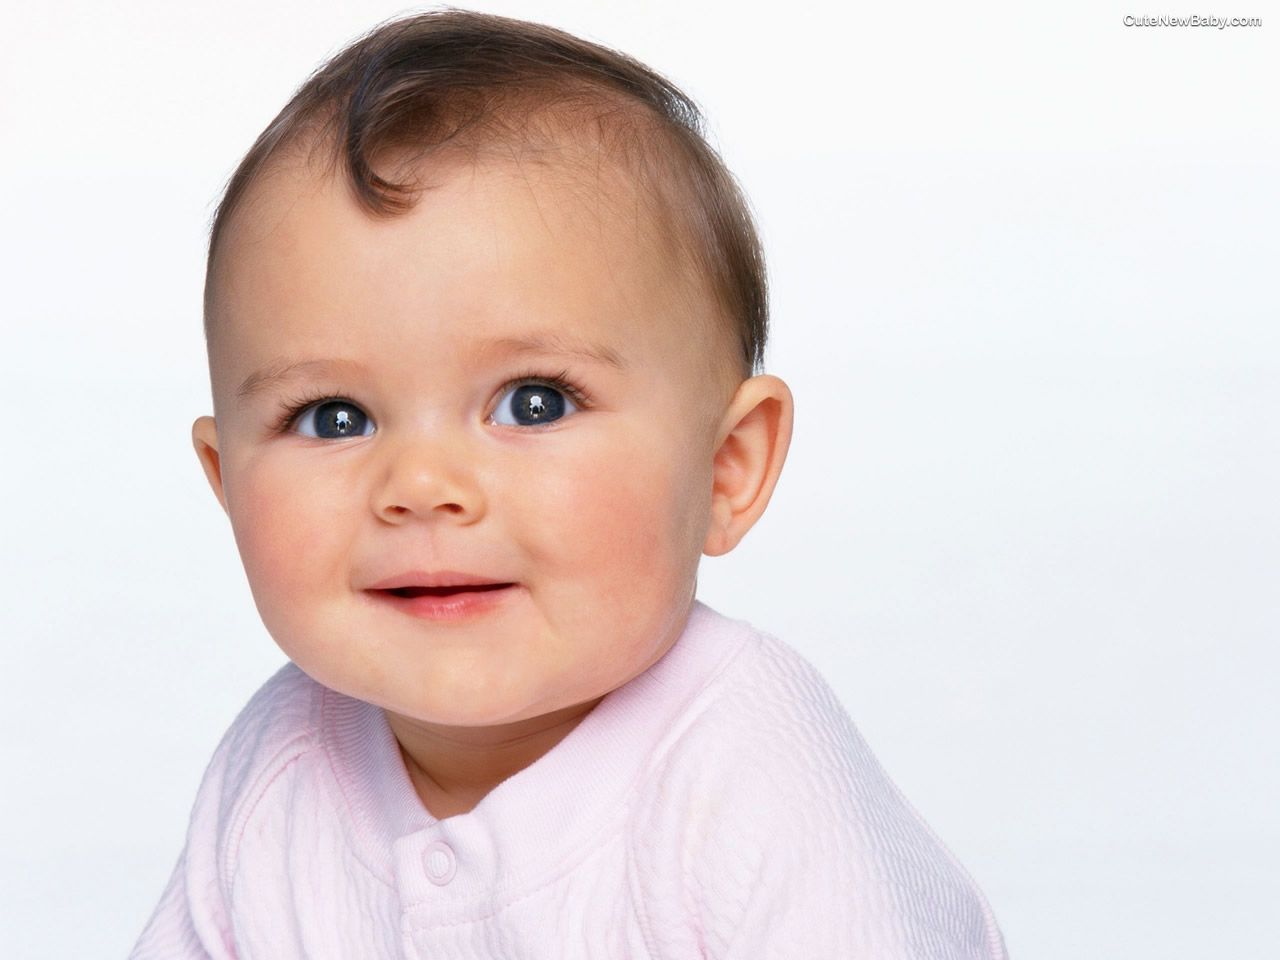 Free download Cute baby boy face HD wallpaper CuteNewBabycom [1280x960] for your Desktop, Mobile & Tablet. Explore Cute Baby Boy Picture Wallpaper. Baby Boy Image Wallpaper, Cute Babies Wallpaper